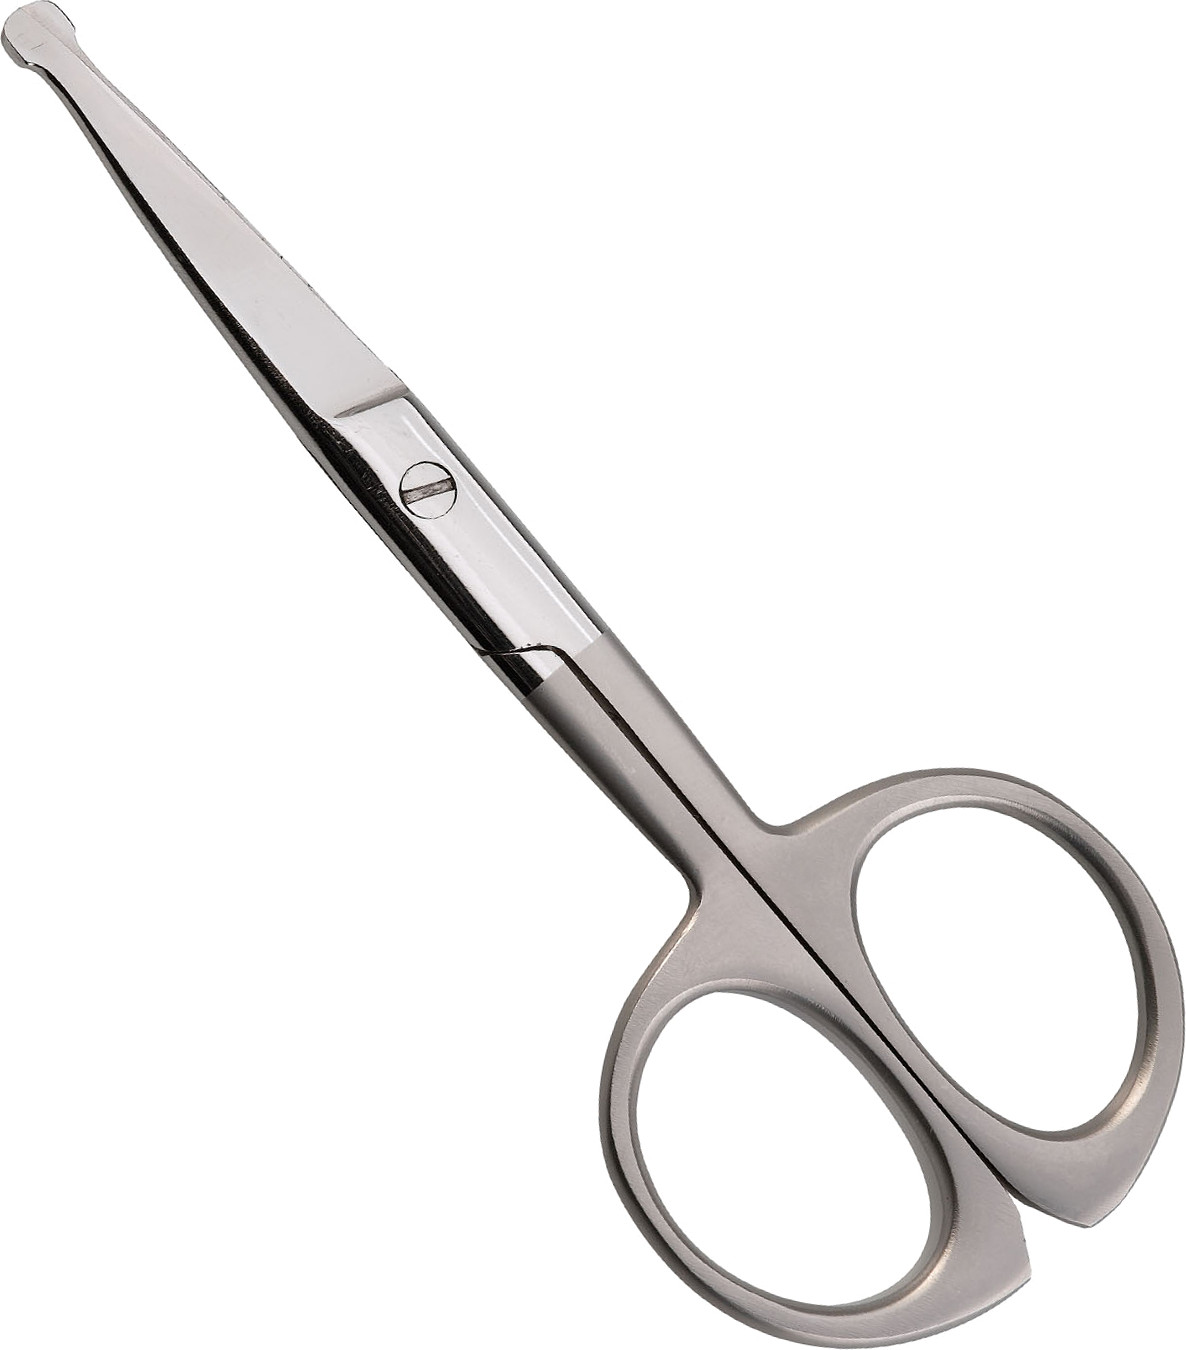  Barburys Scissors FOR Nose Hair 